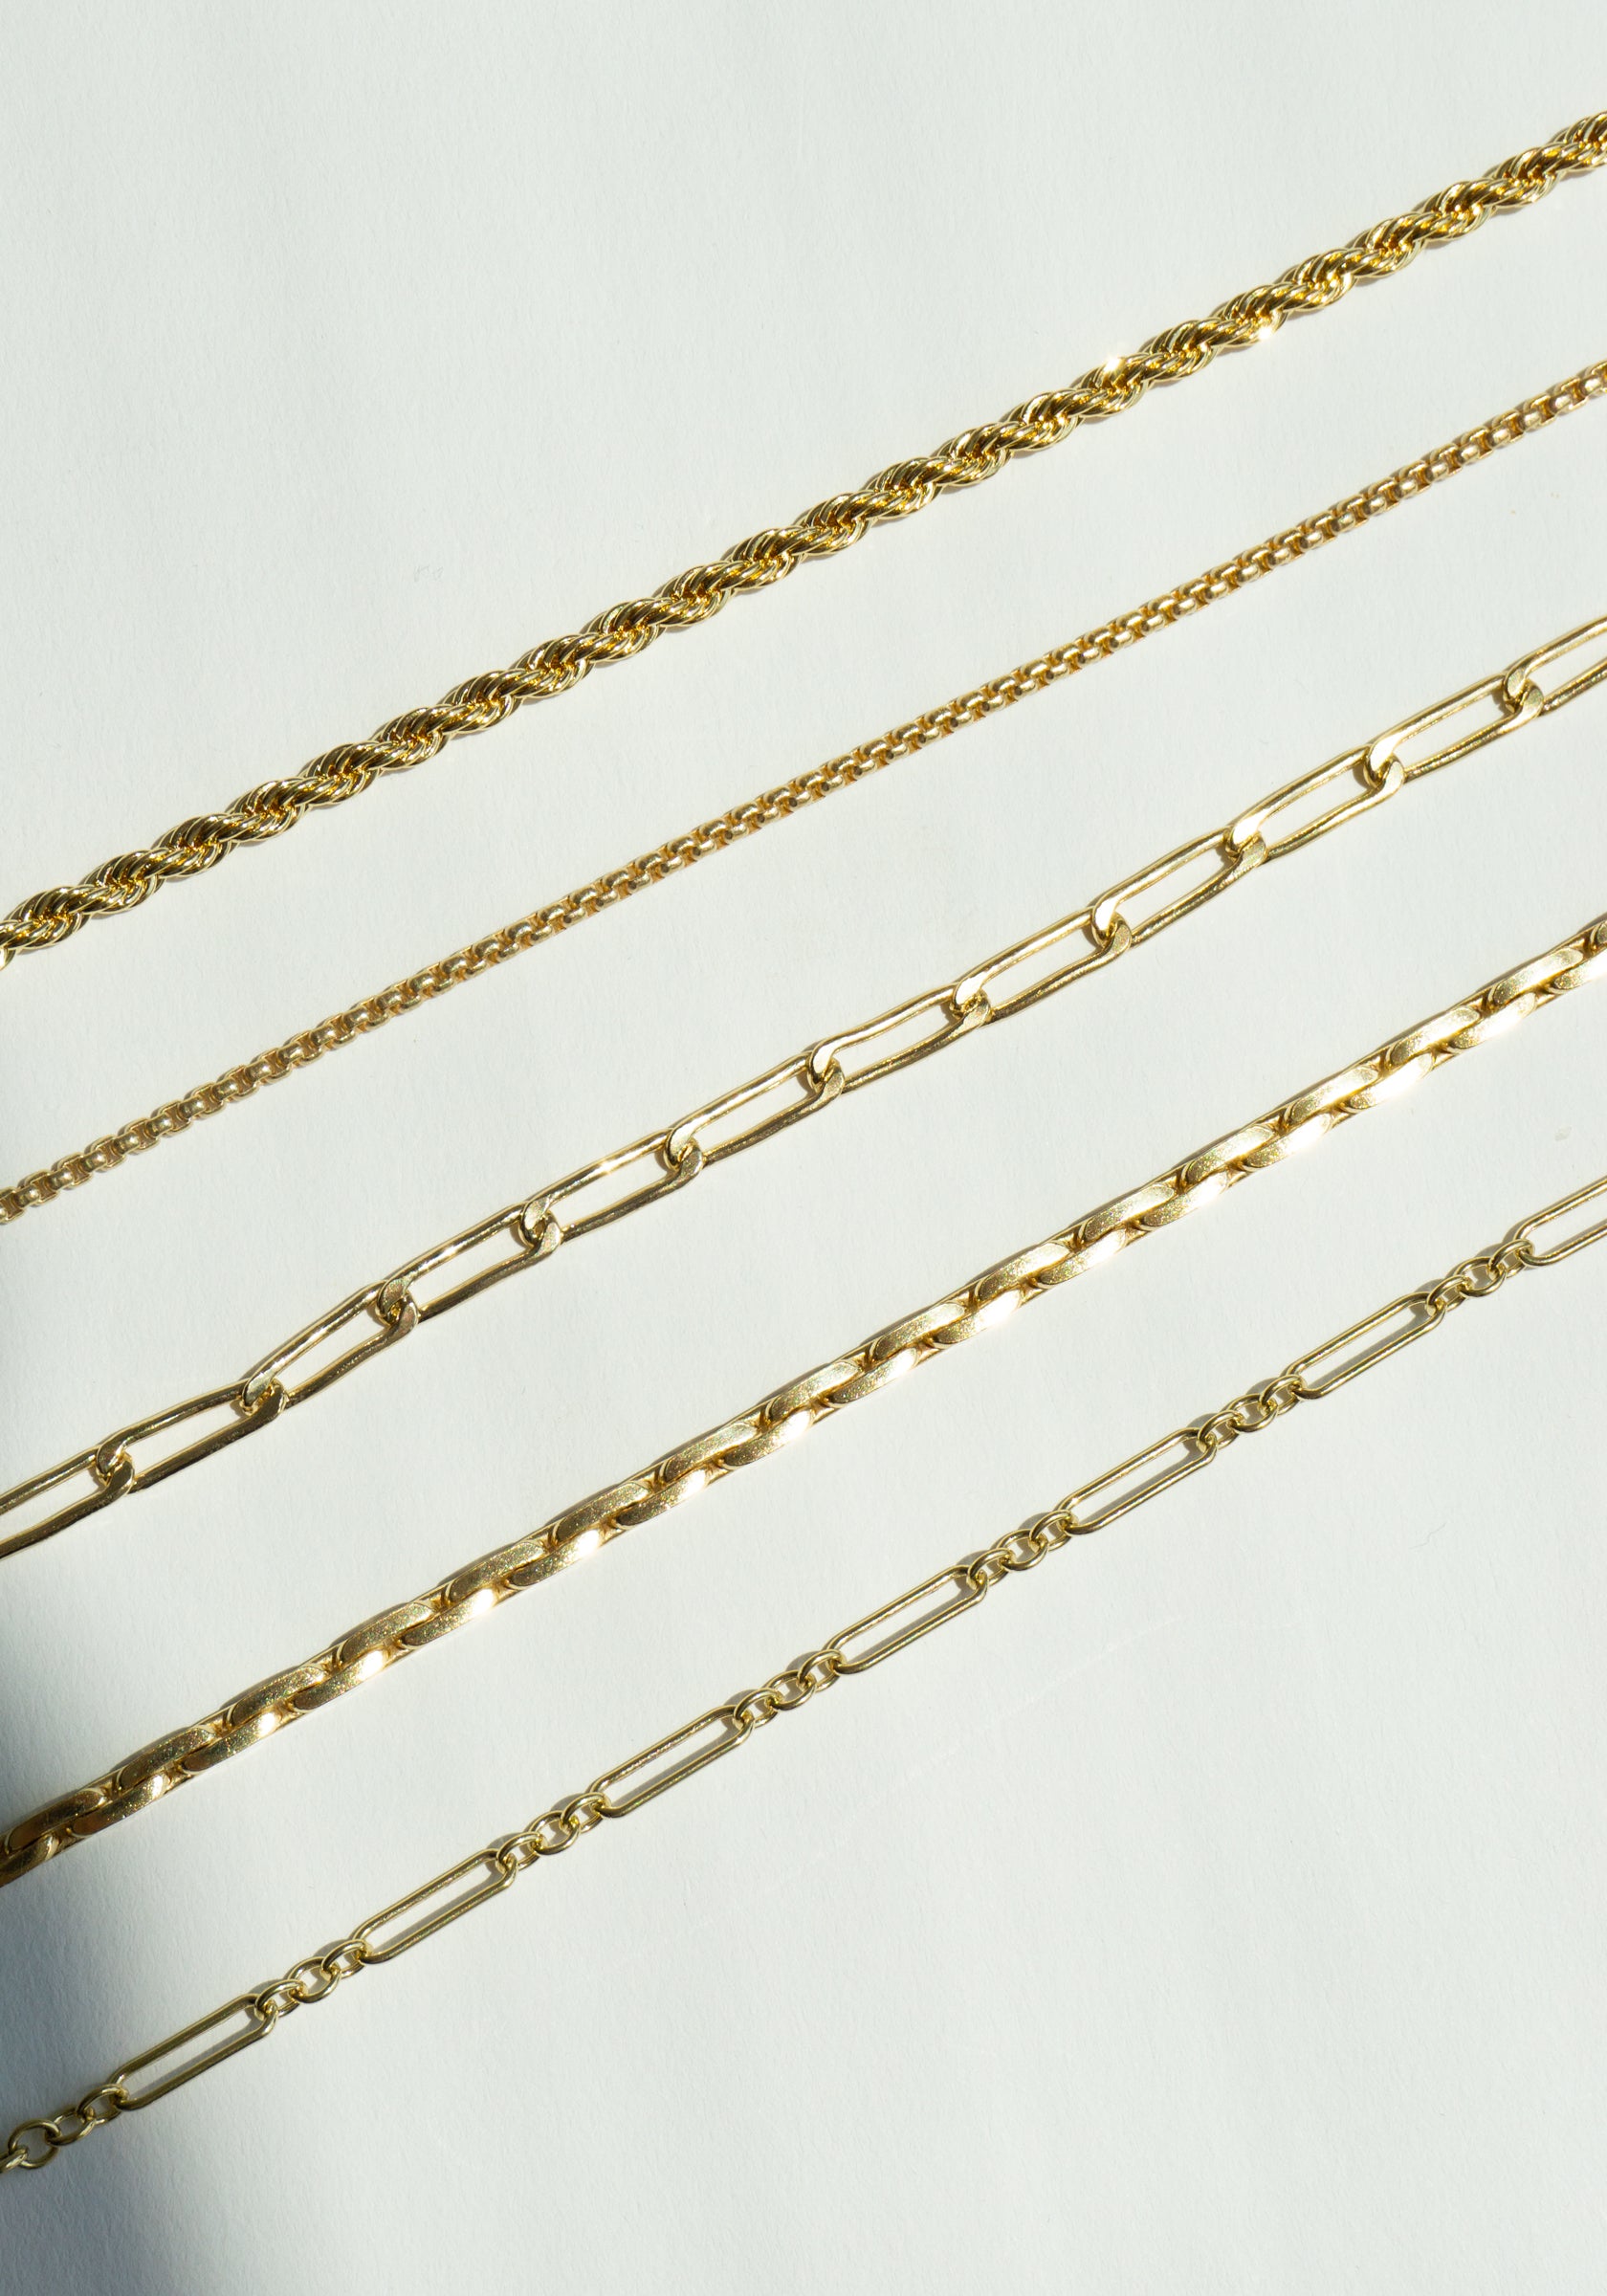 Laura Lombardi Chain Necklaces